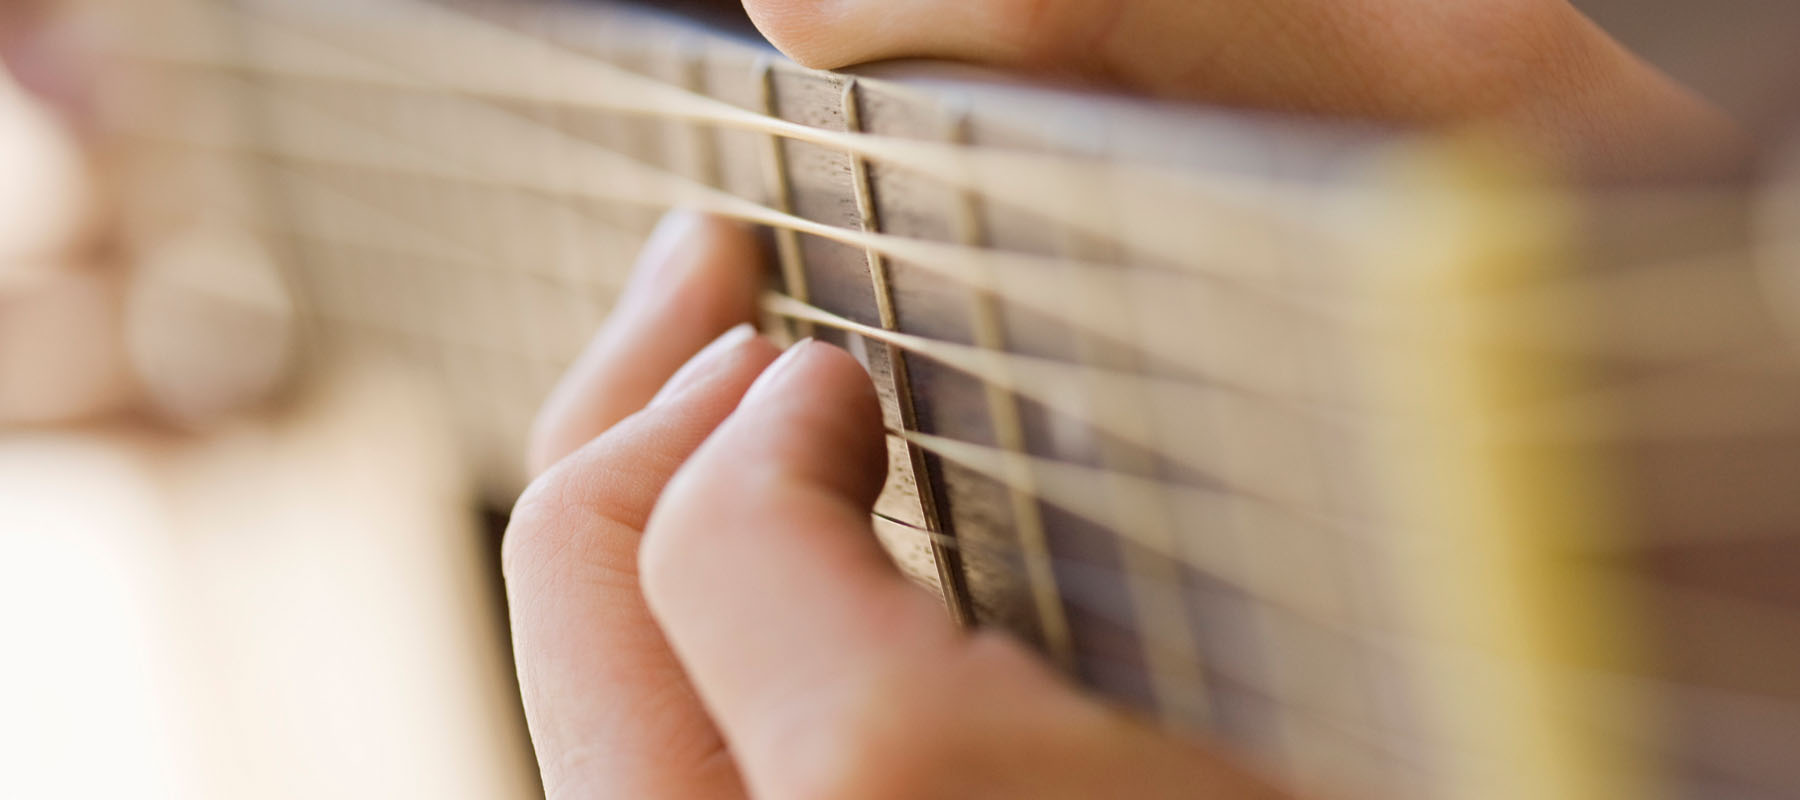 fingers strumming a guitar